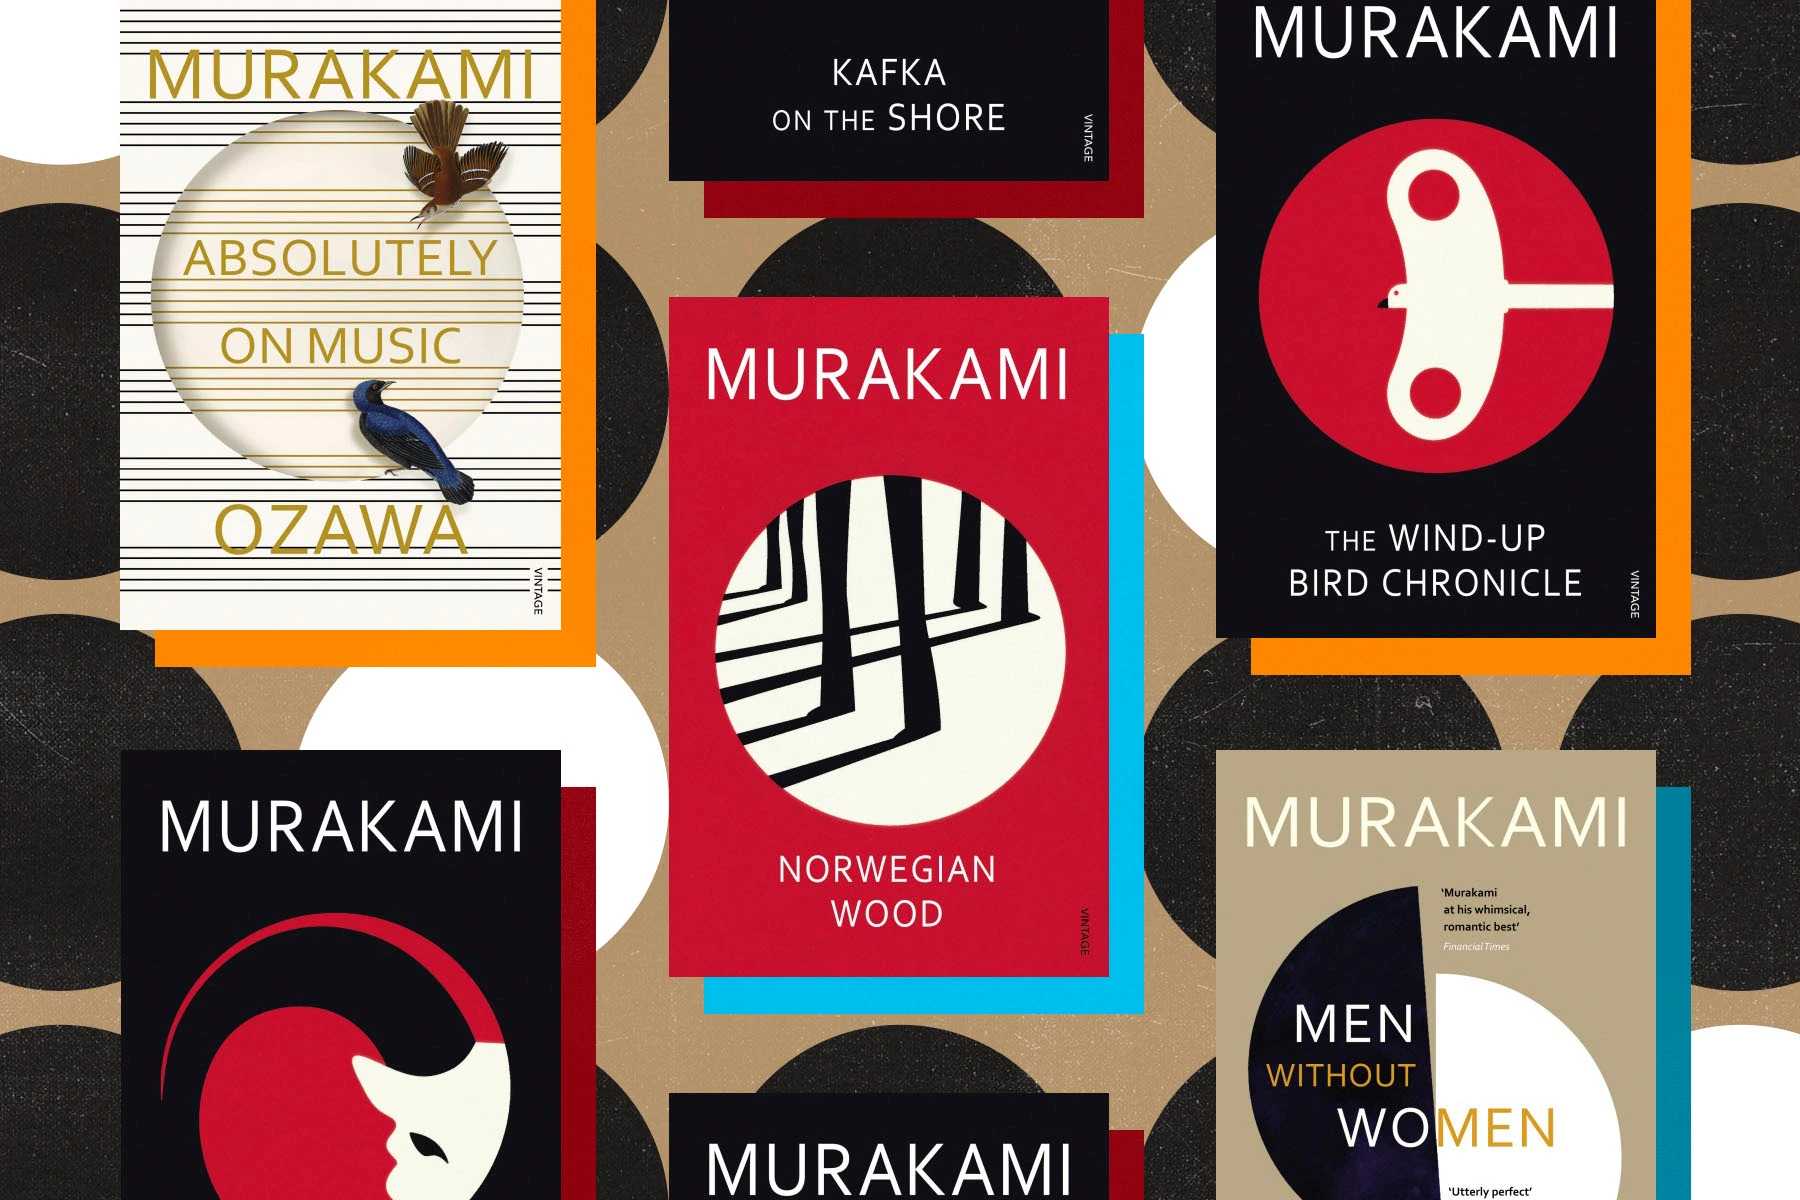 murakami novel covers book quiz.